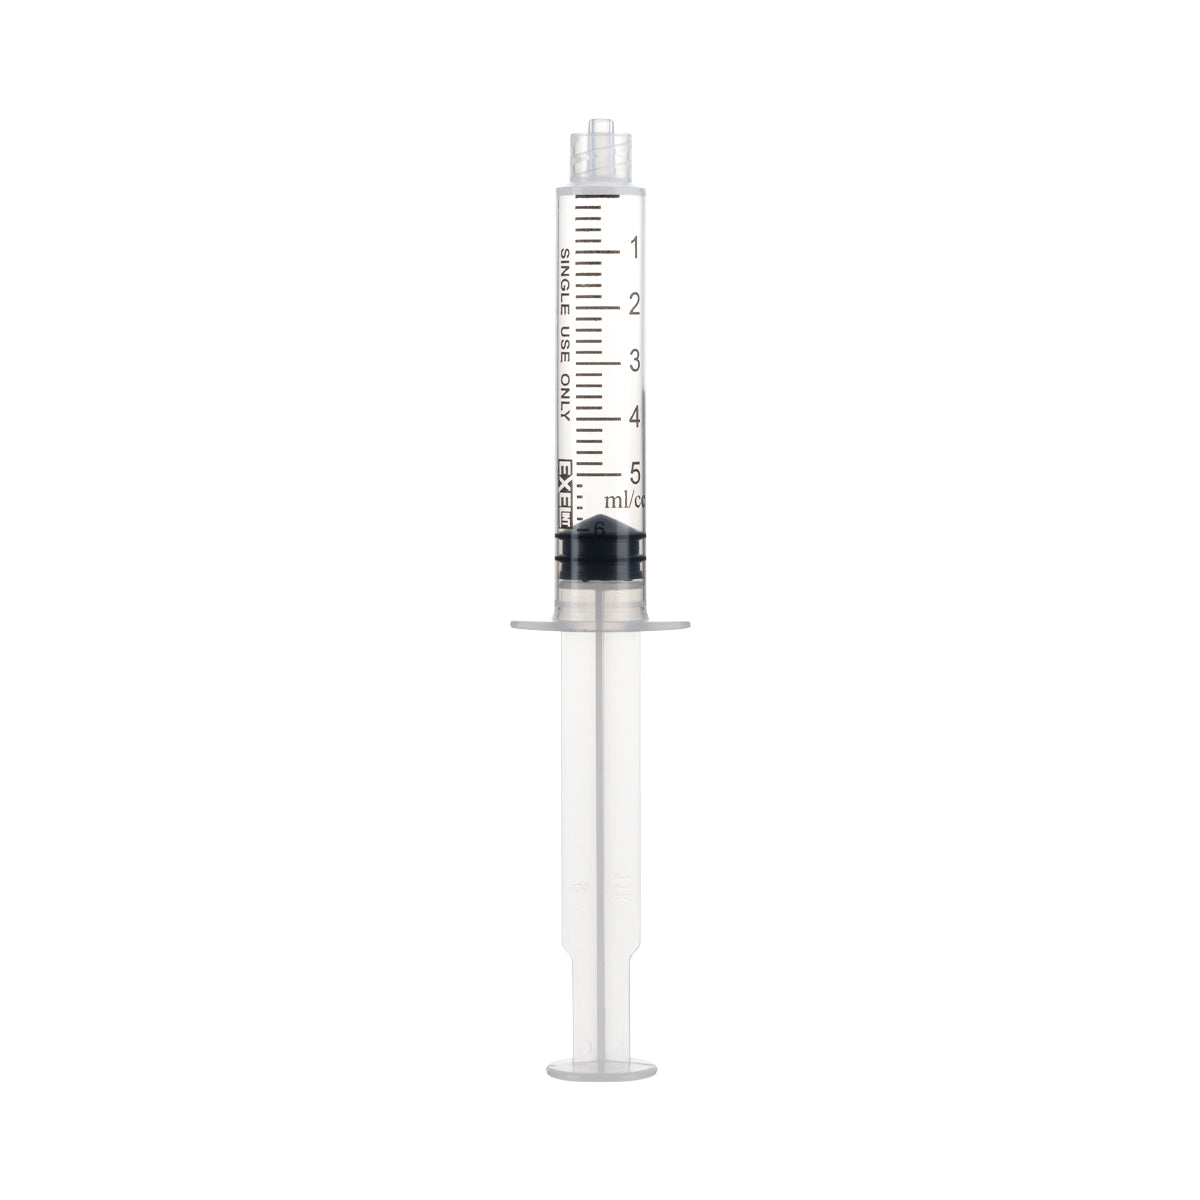 Luer Lock | Concentrate Syringe | 5mL - 1mL Increments - 100 Count Syringe Biohazard Inc   